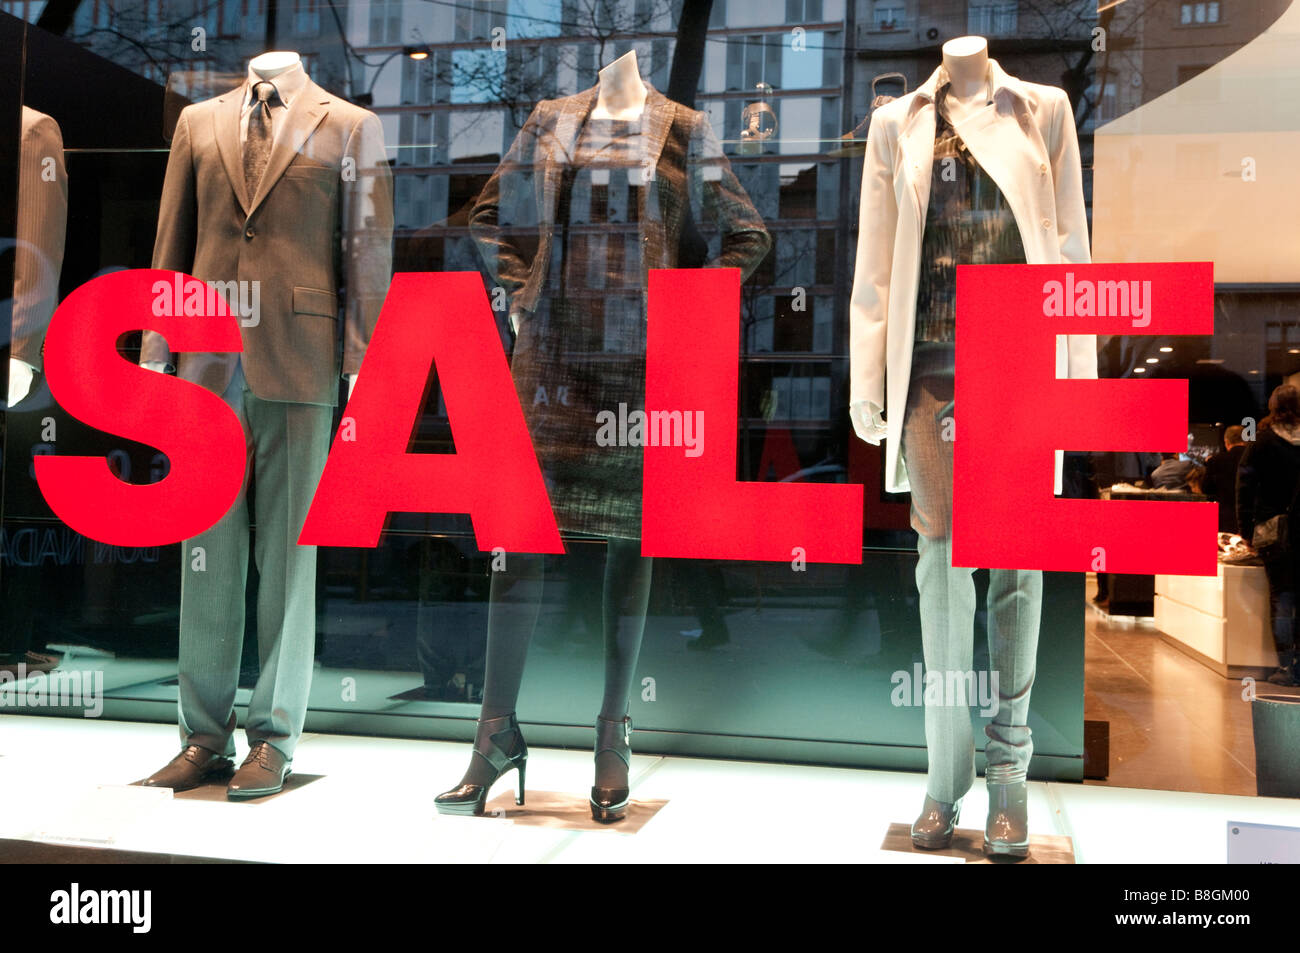 Big sales sign in shop window, Spain Stock Photo